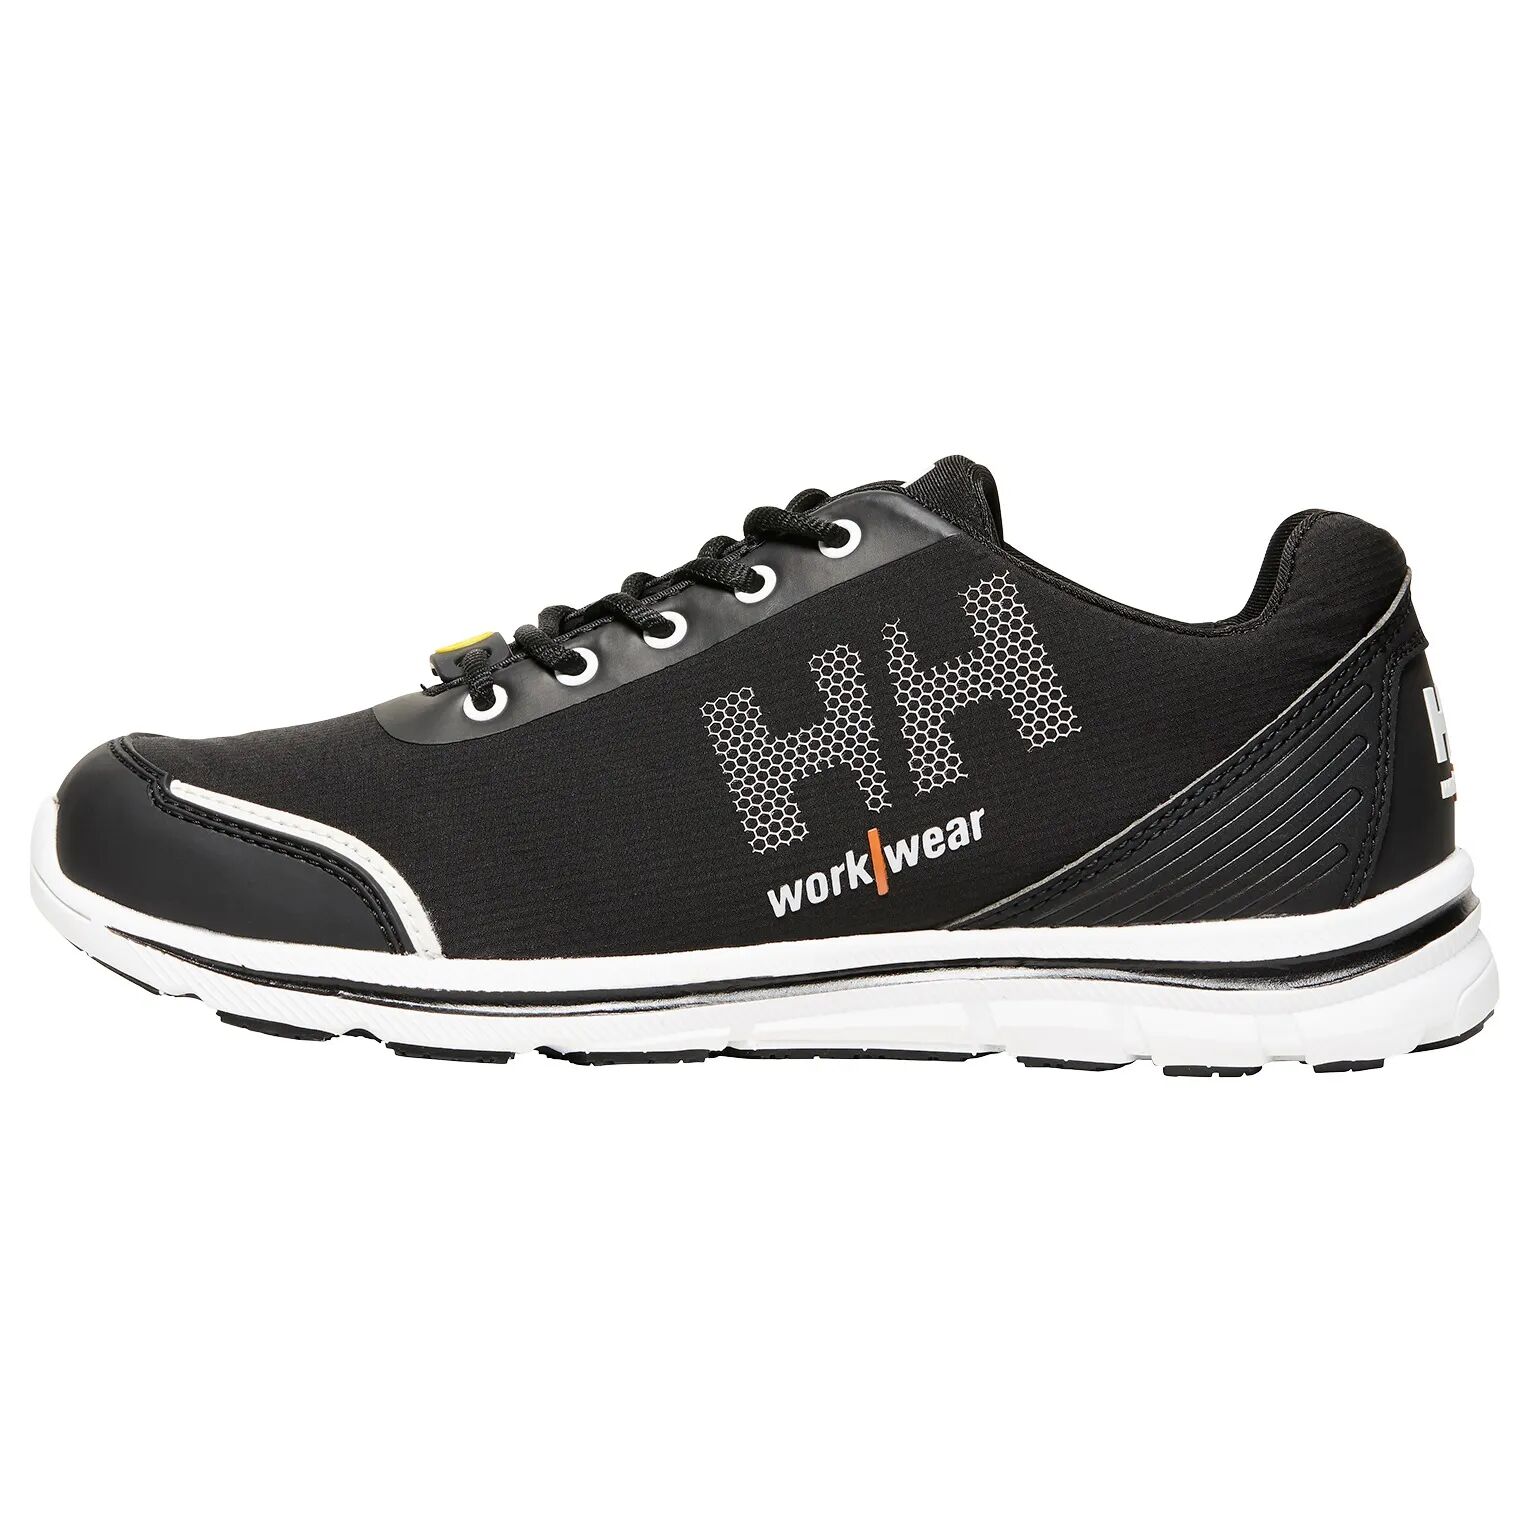 HH Workwear Helly Hansen Work Oslo Soft Toe Slip Resistant O1 Safety Shoe   Hh Workwear Fi 37 Black  Male